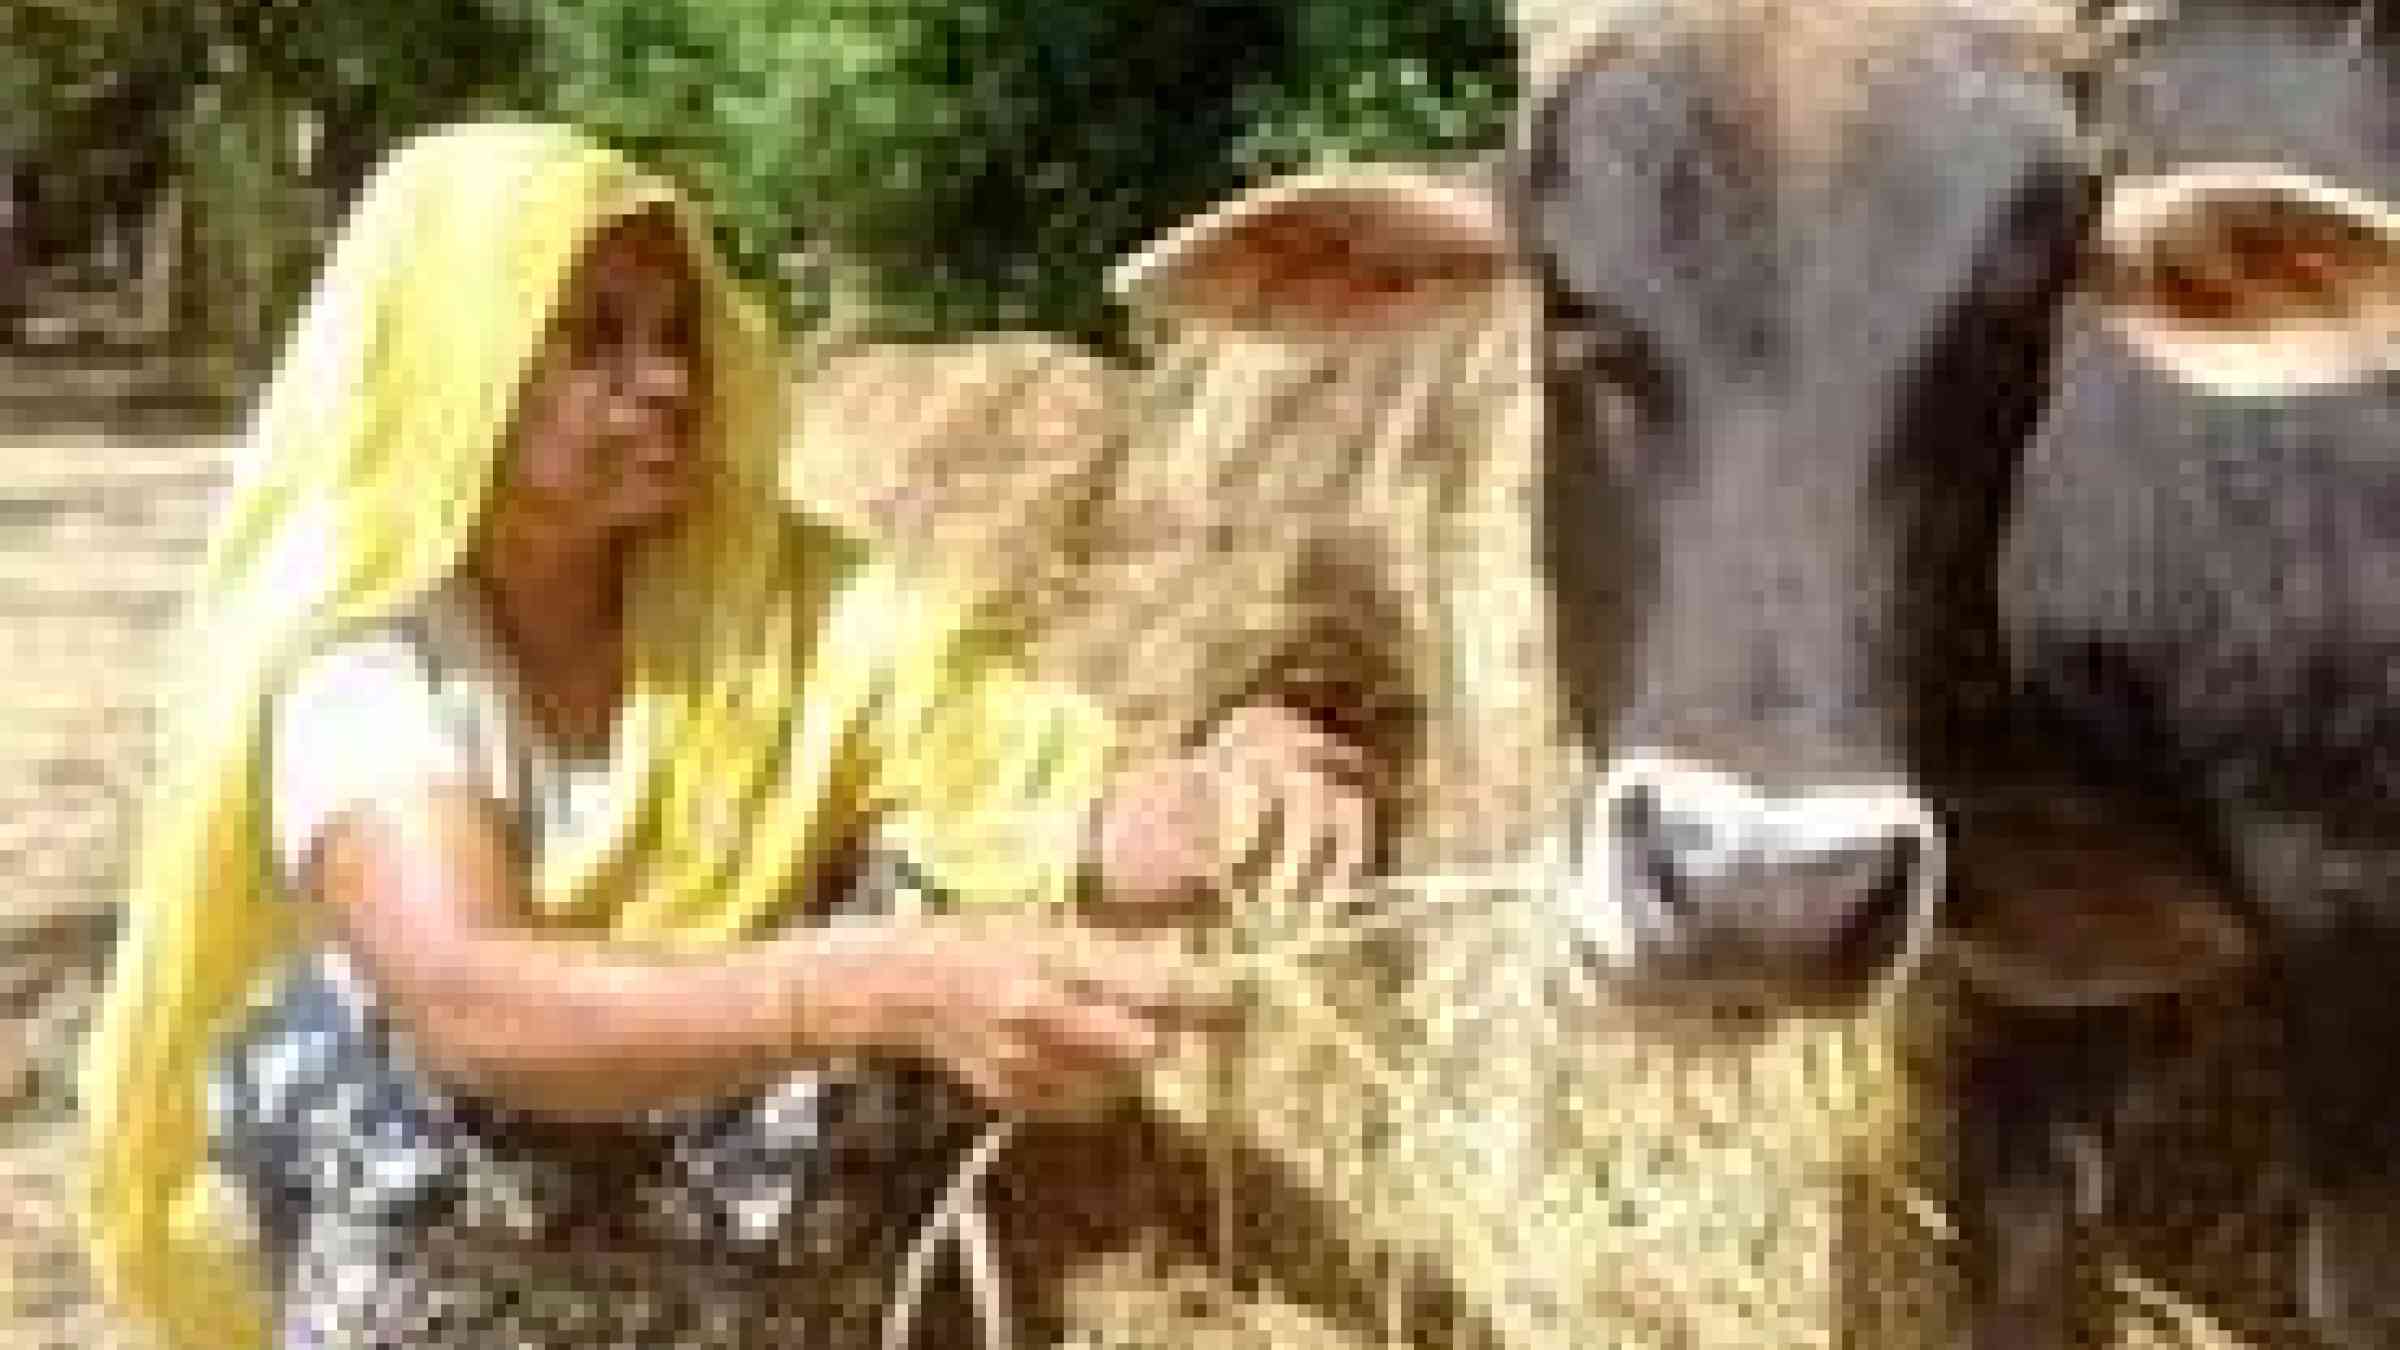 David Swanson/Irin http://www.irinnews.org/Report/96555/BANGLADESH-Cyclone-shelters-for-livestock-too